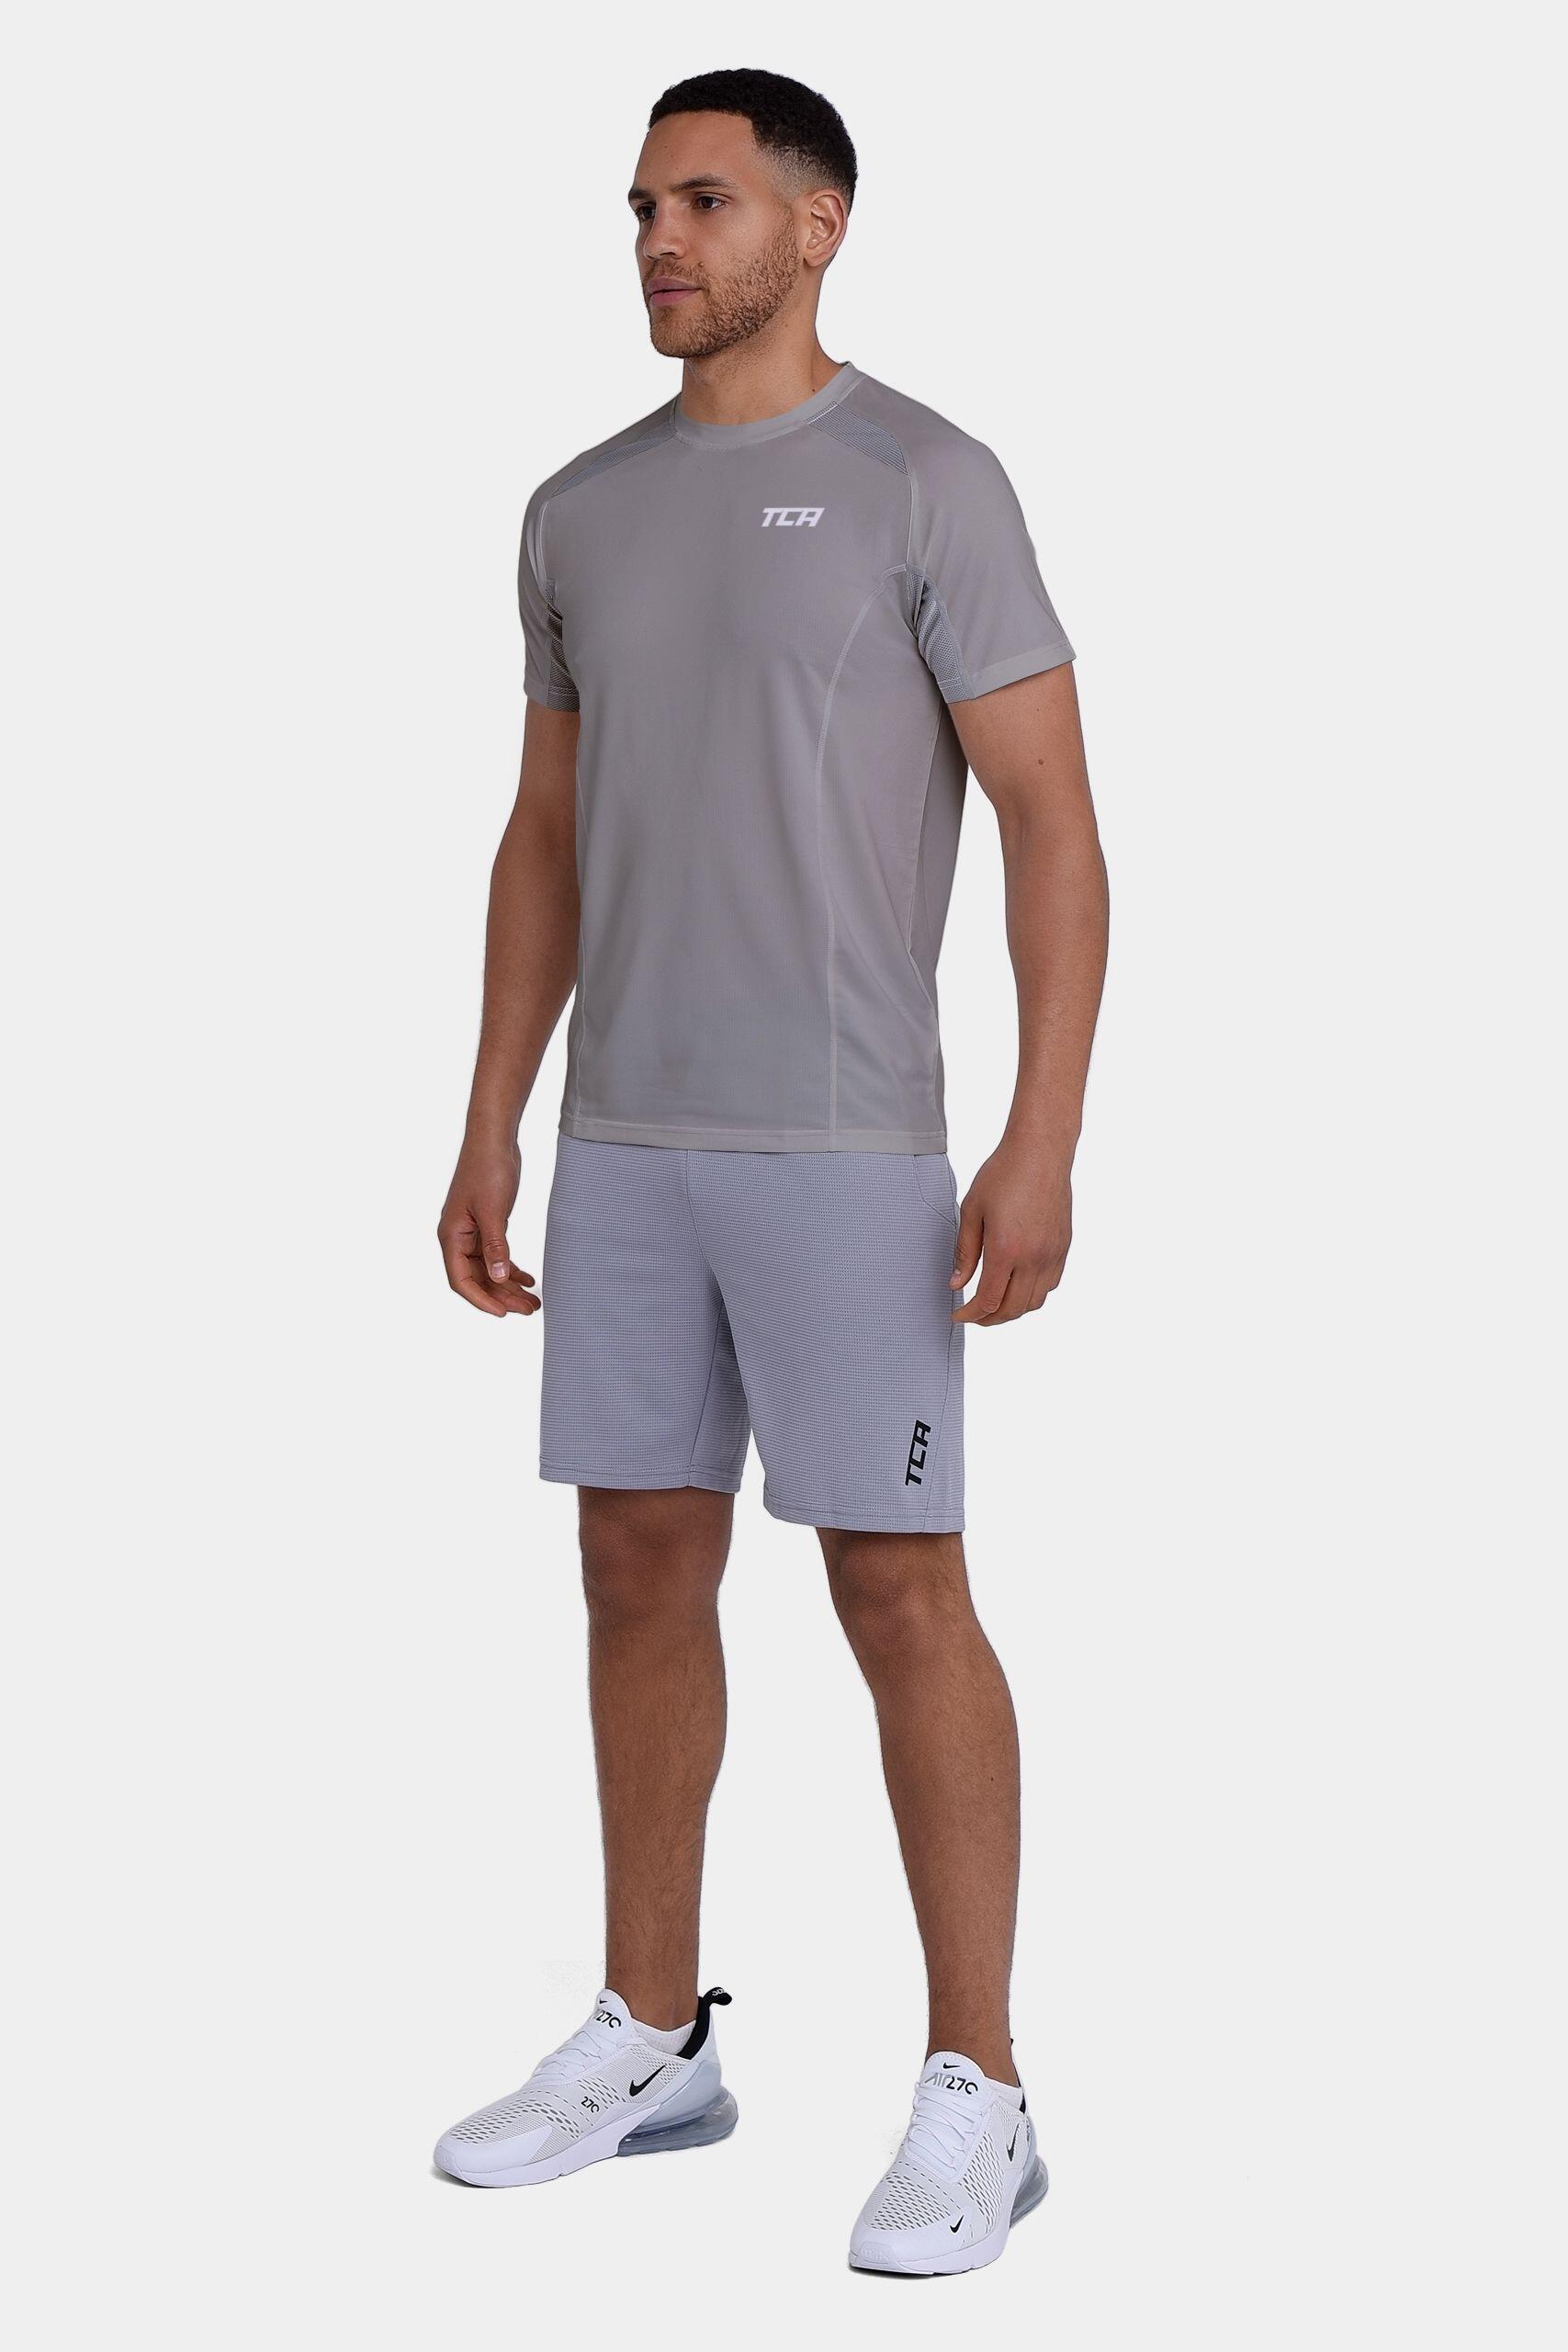 TCA Men's Super Light QuickDry Running T-Shirt - Cool Grey